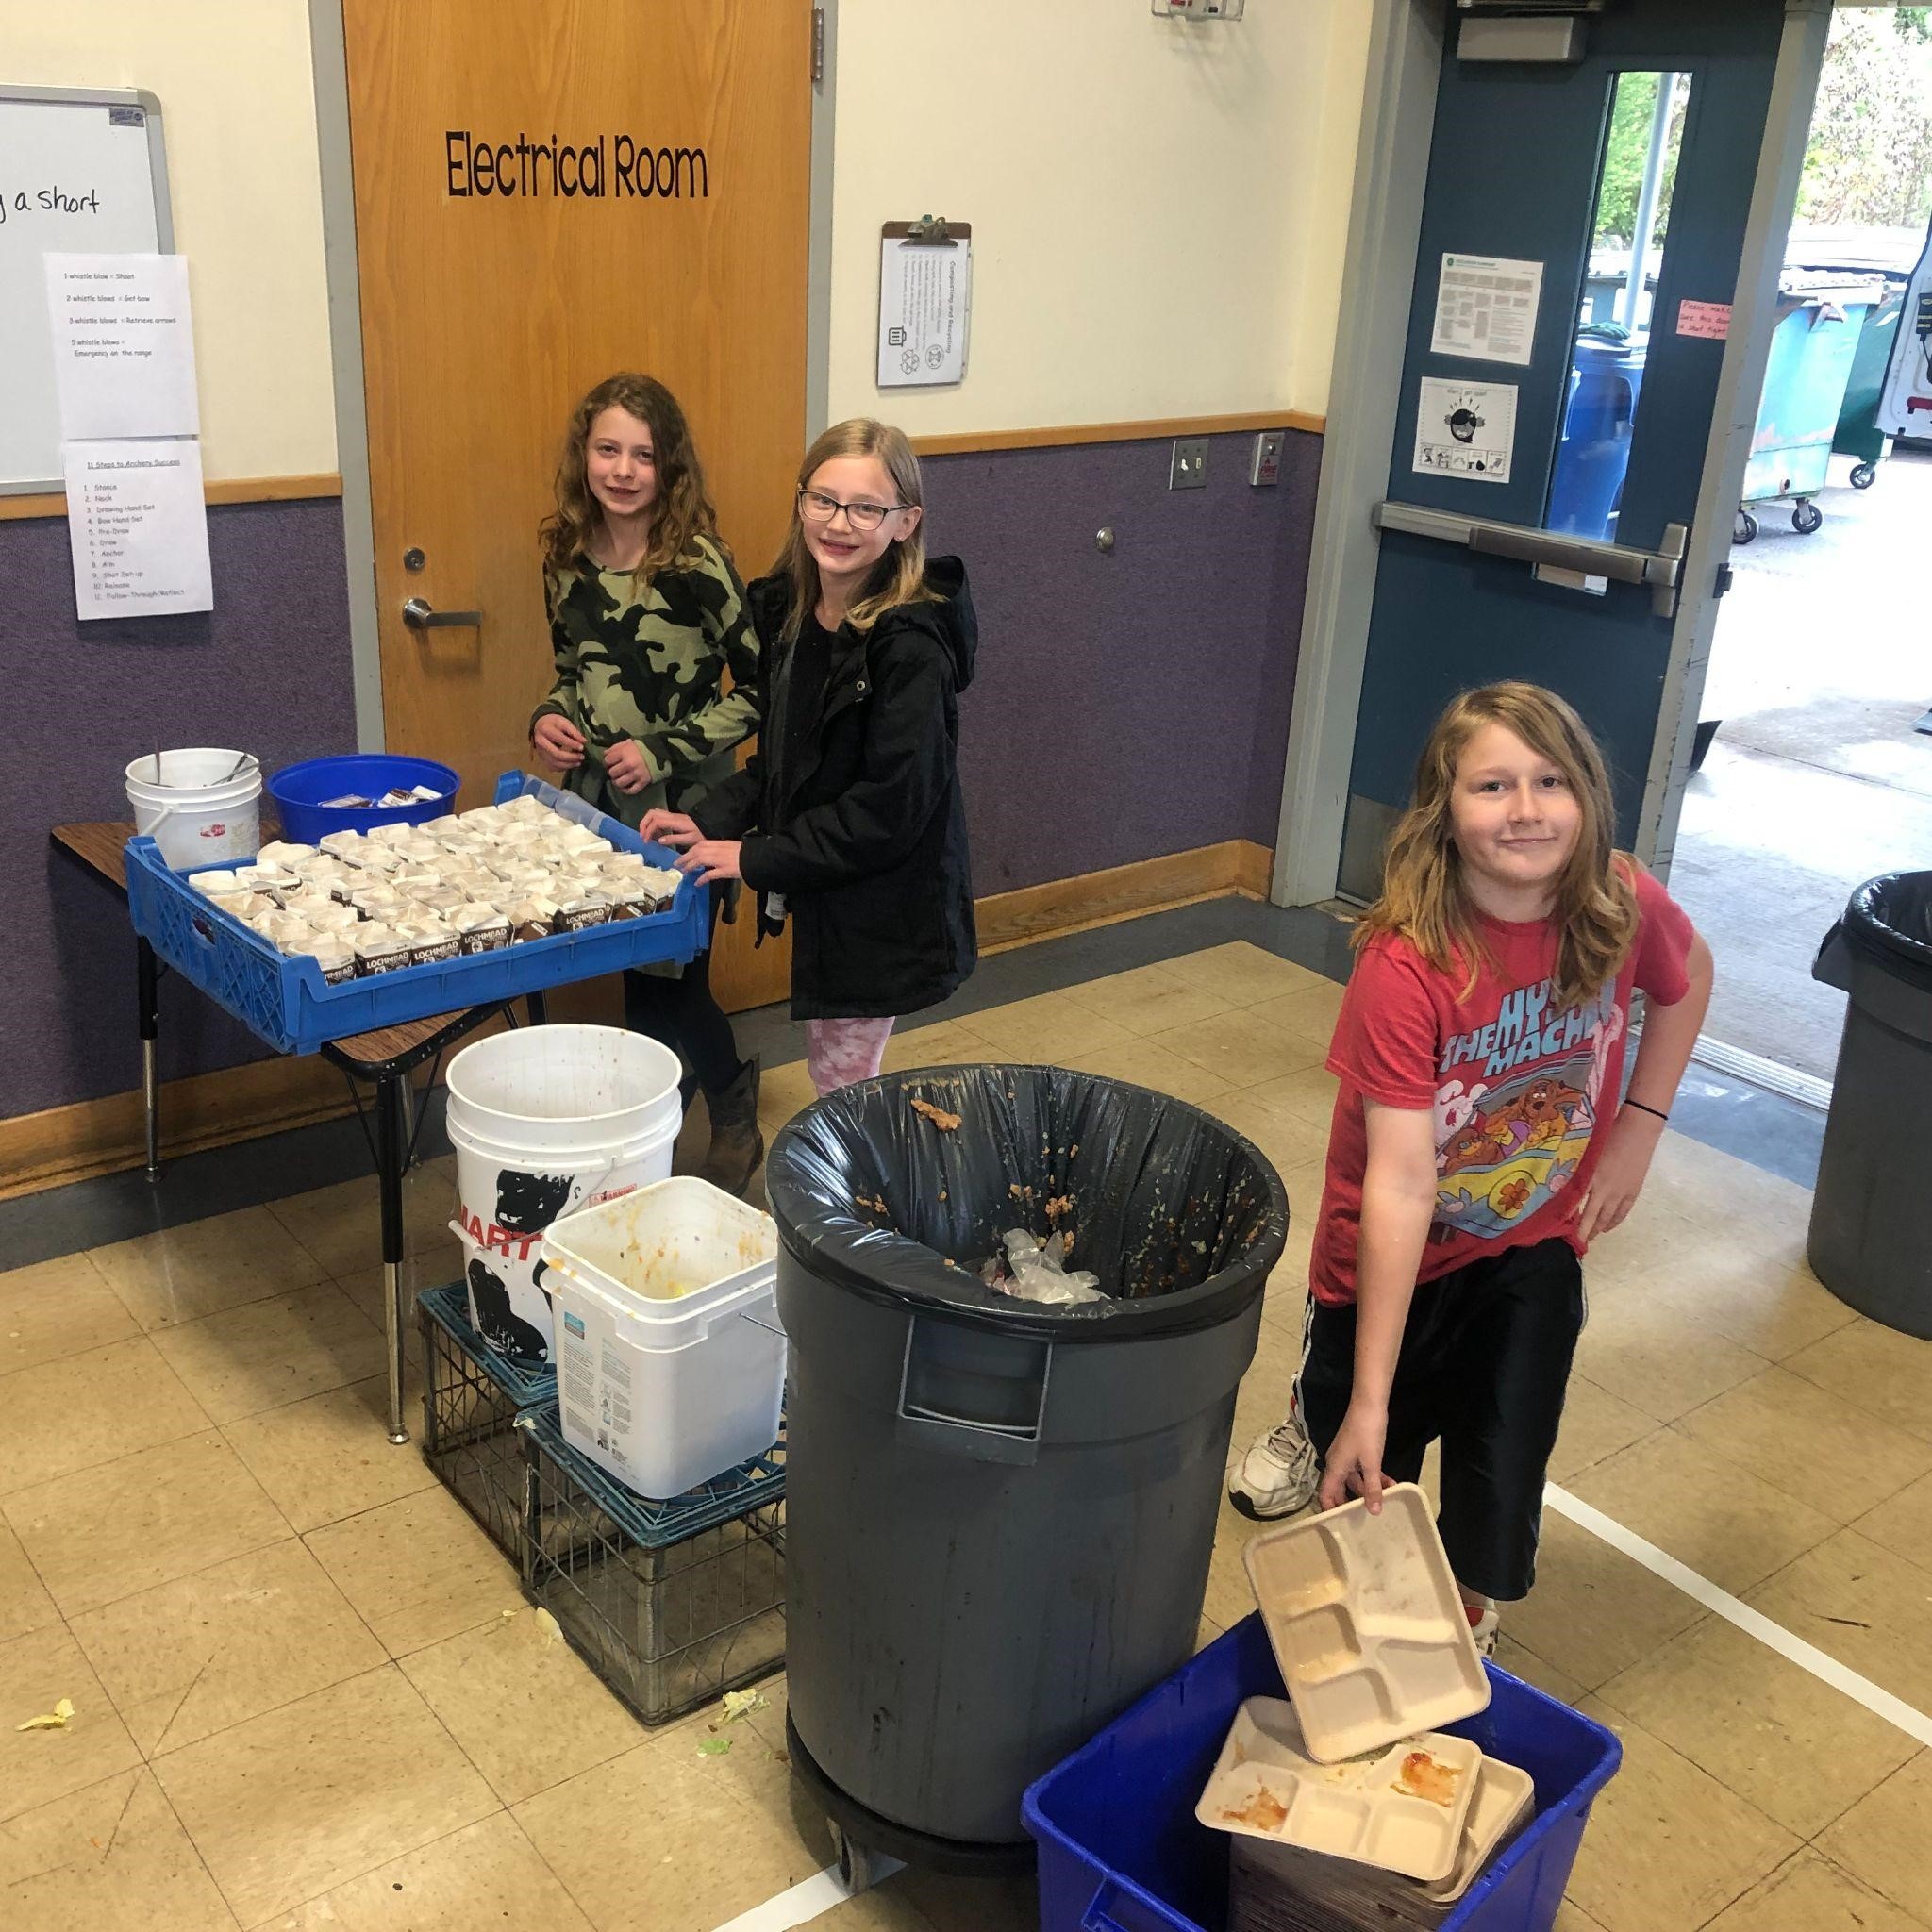 Three kids are composting cardboard and food scraps in bins at school